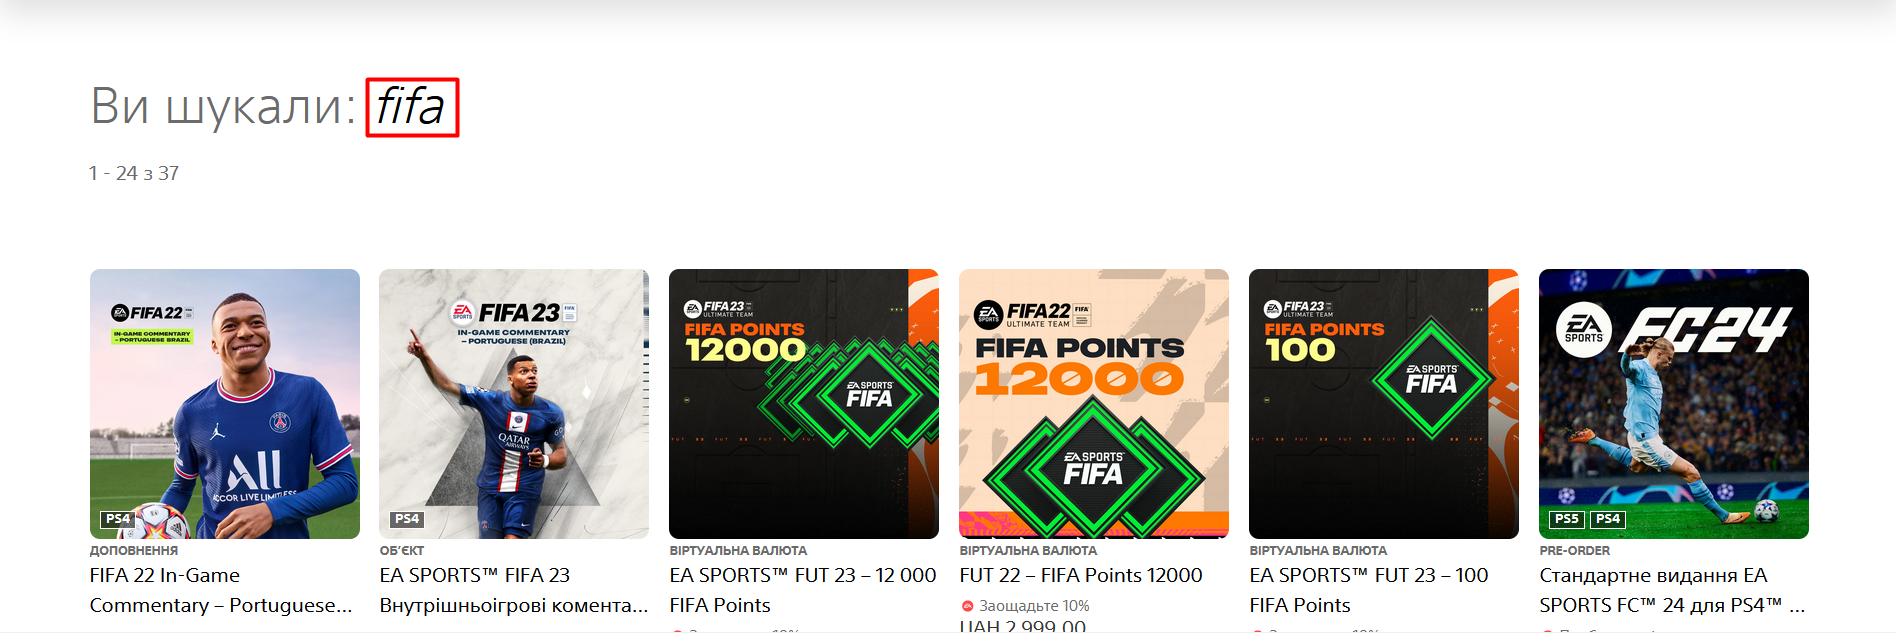 Ea Sports(tm) Fifa 23 Ultimate Edition Steam Digital